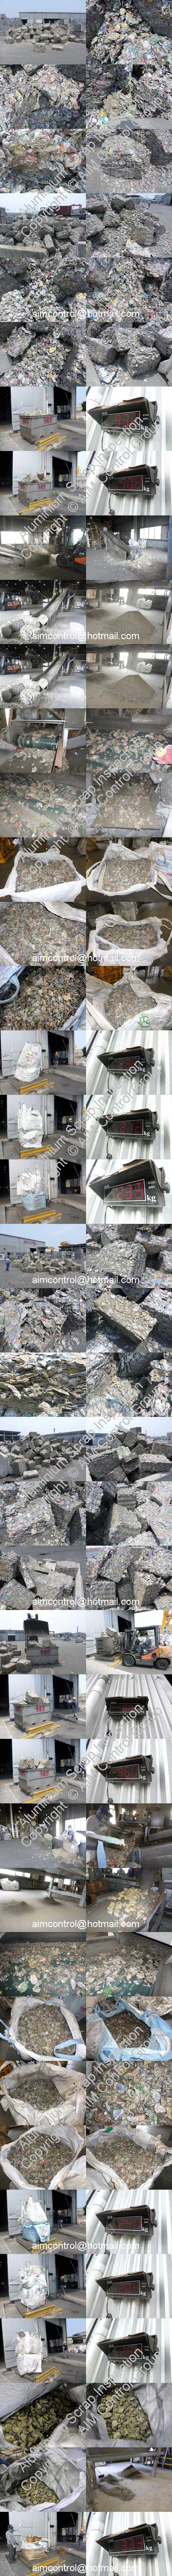 Cargo_damage_inspection_services - for Plastic scrap - AIM_Control